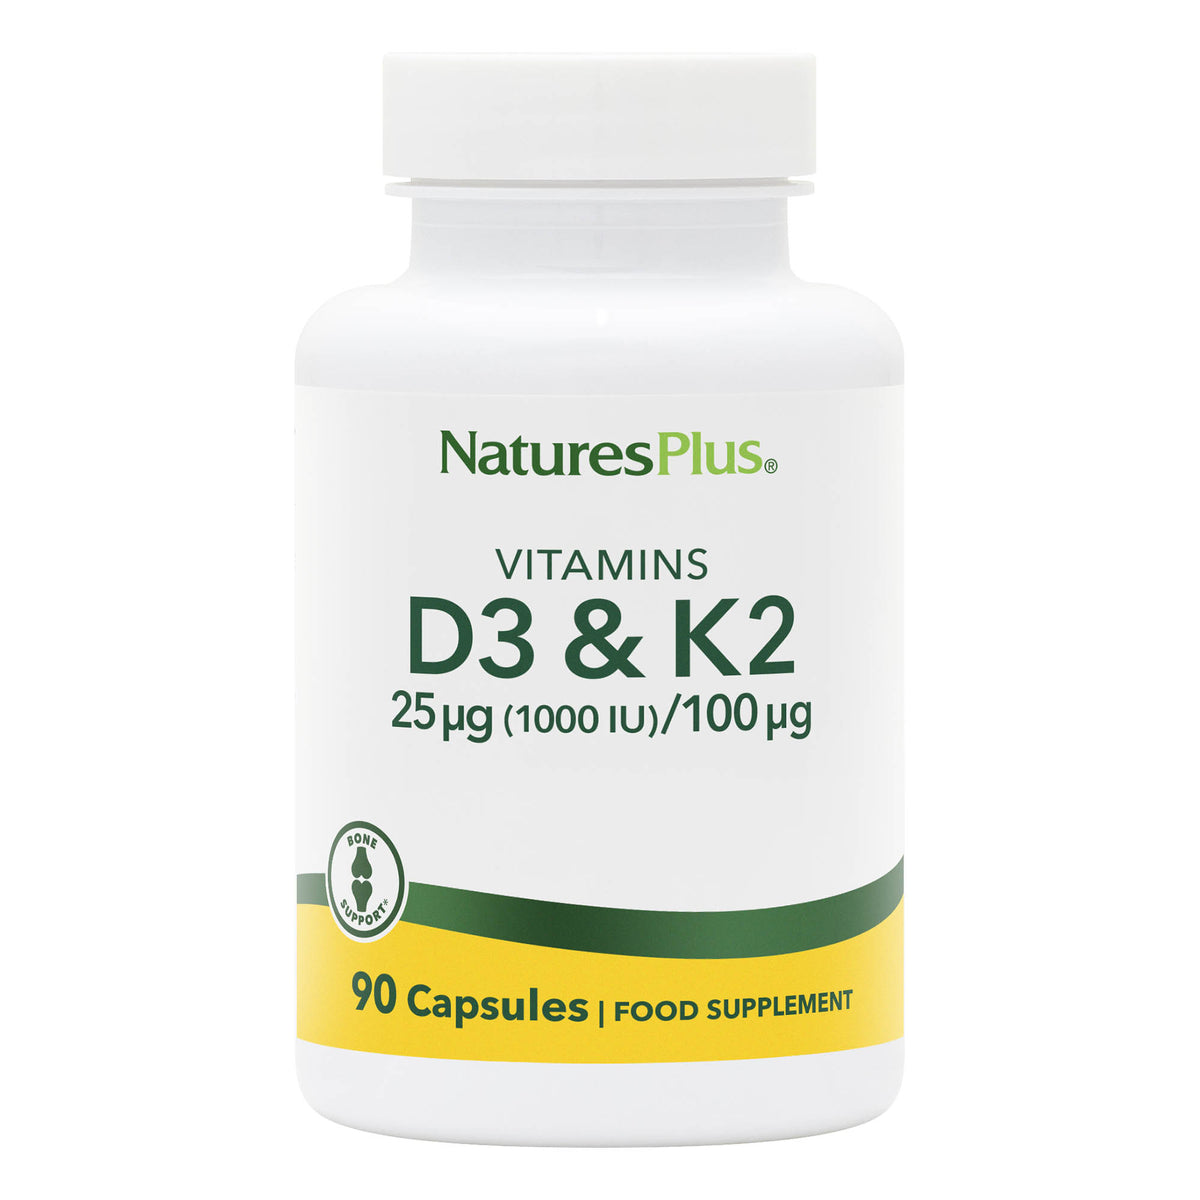 product image of Vitamin D3 1000 IU/Vitamin K2 100 mcg Capsules containing Vitamin D3 1000 IU/Vitamin K2 100 mcg Capsules